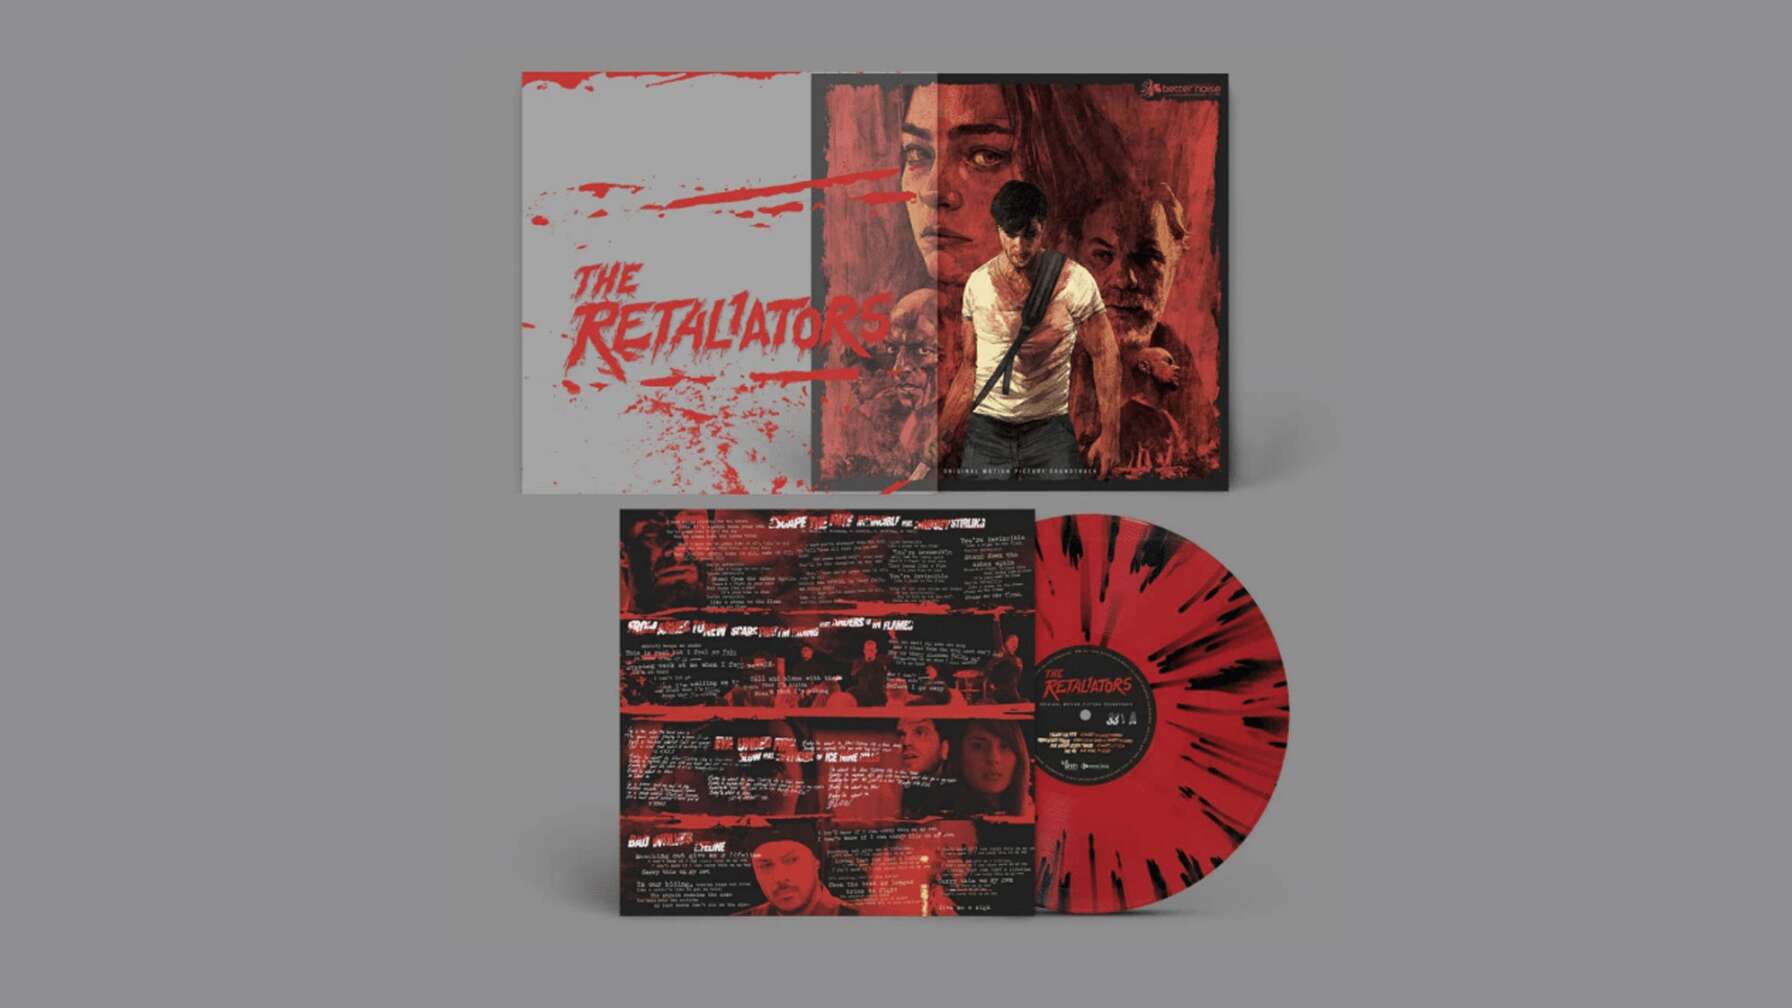 Der Soundtrack zu "The Retaliators" als rot-schwarze Vinyl-LP.